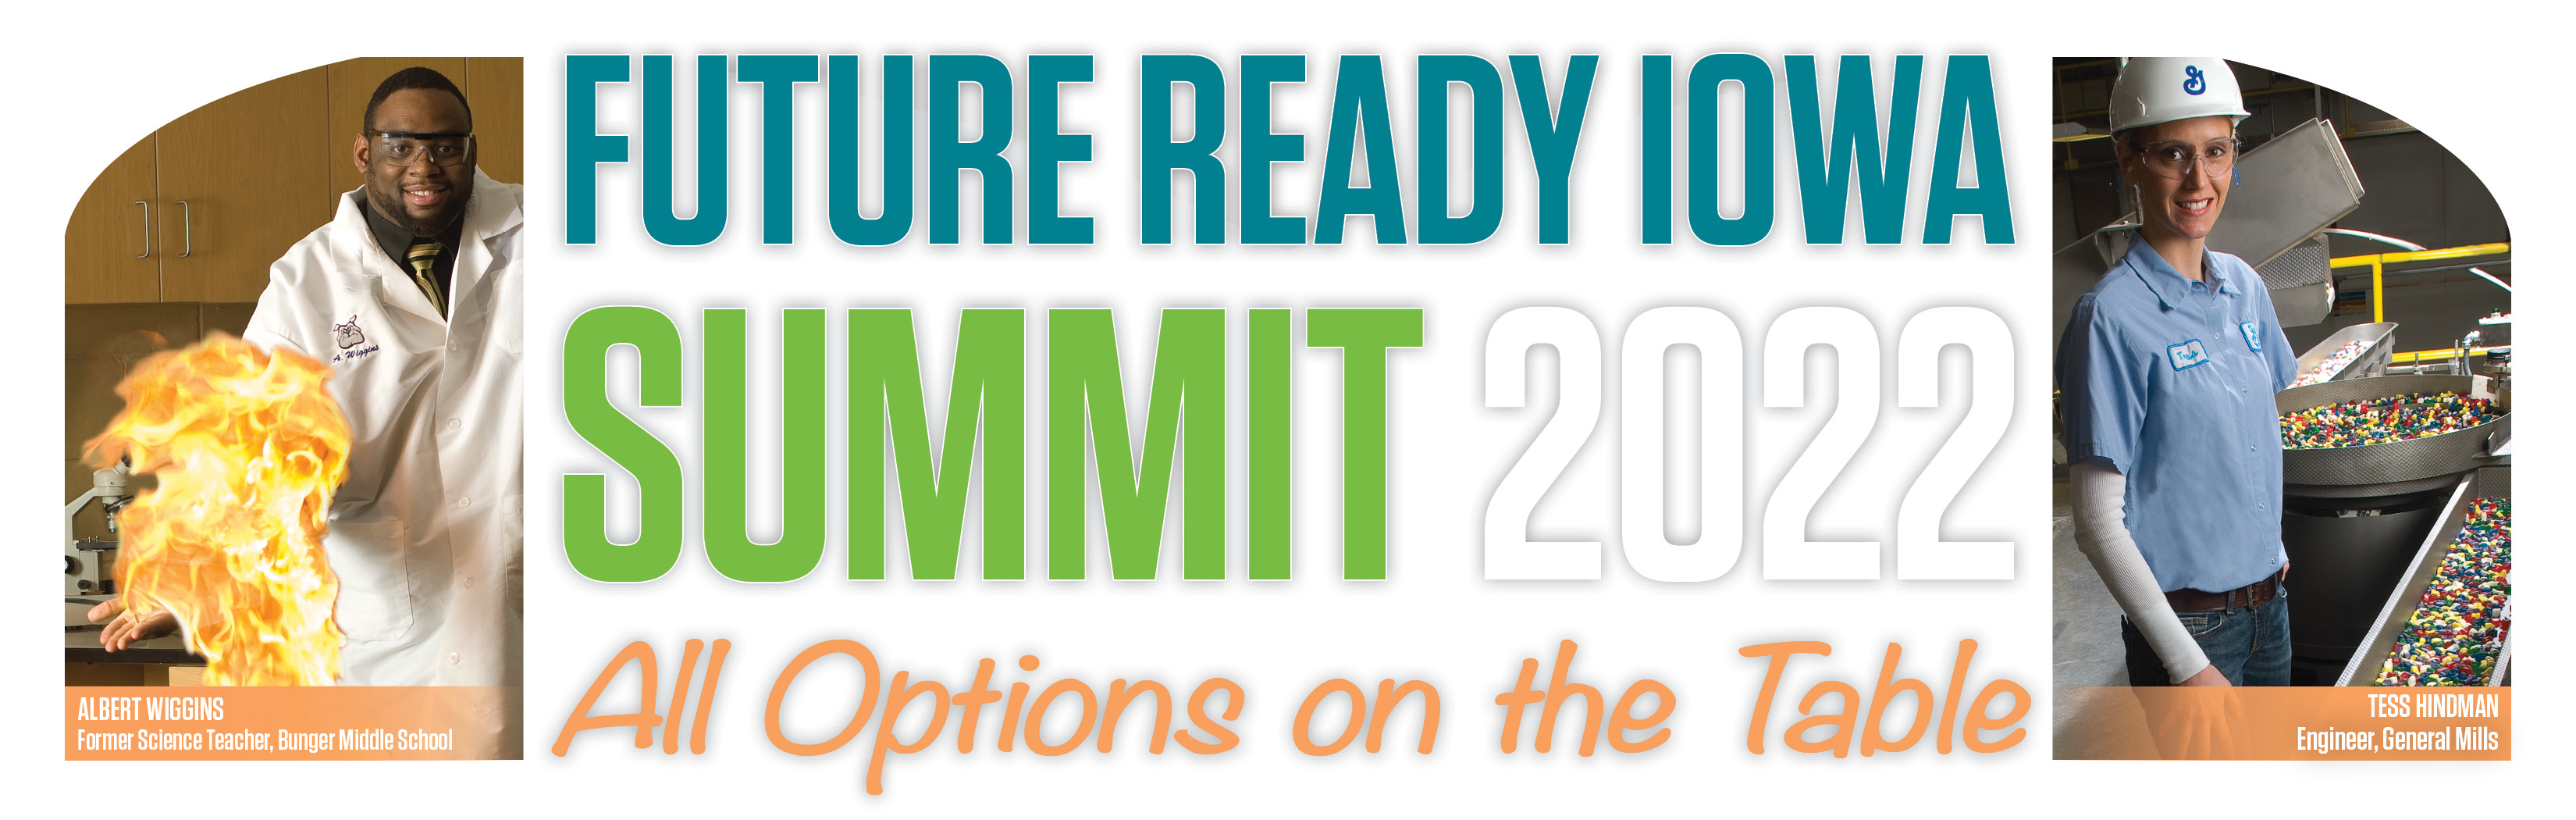 2022 Future Ready Iowa Summit